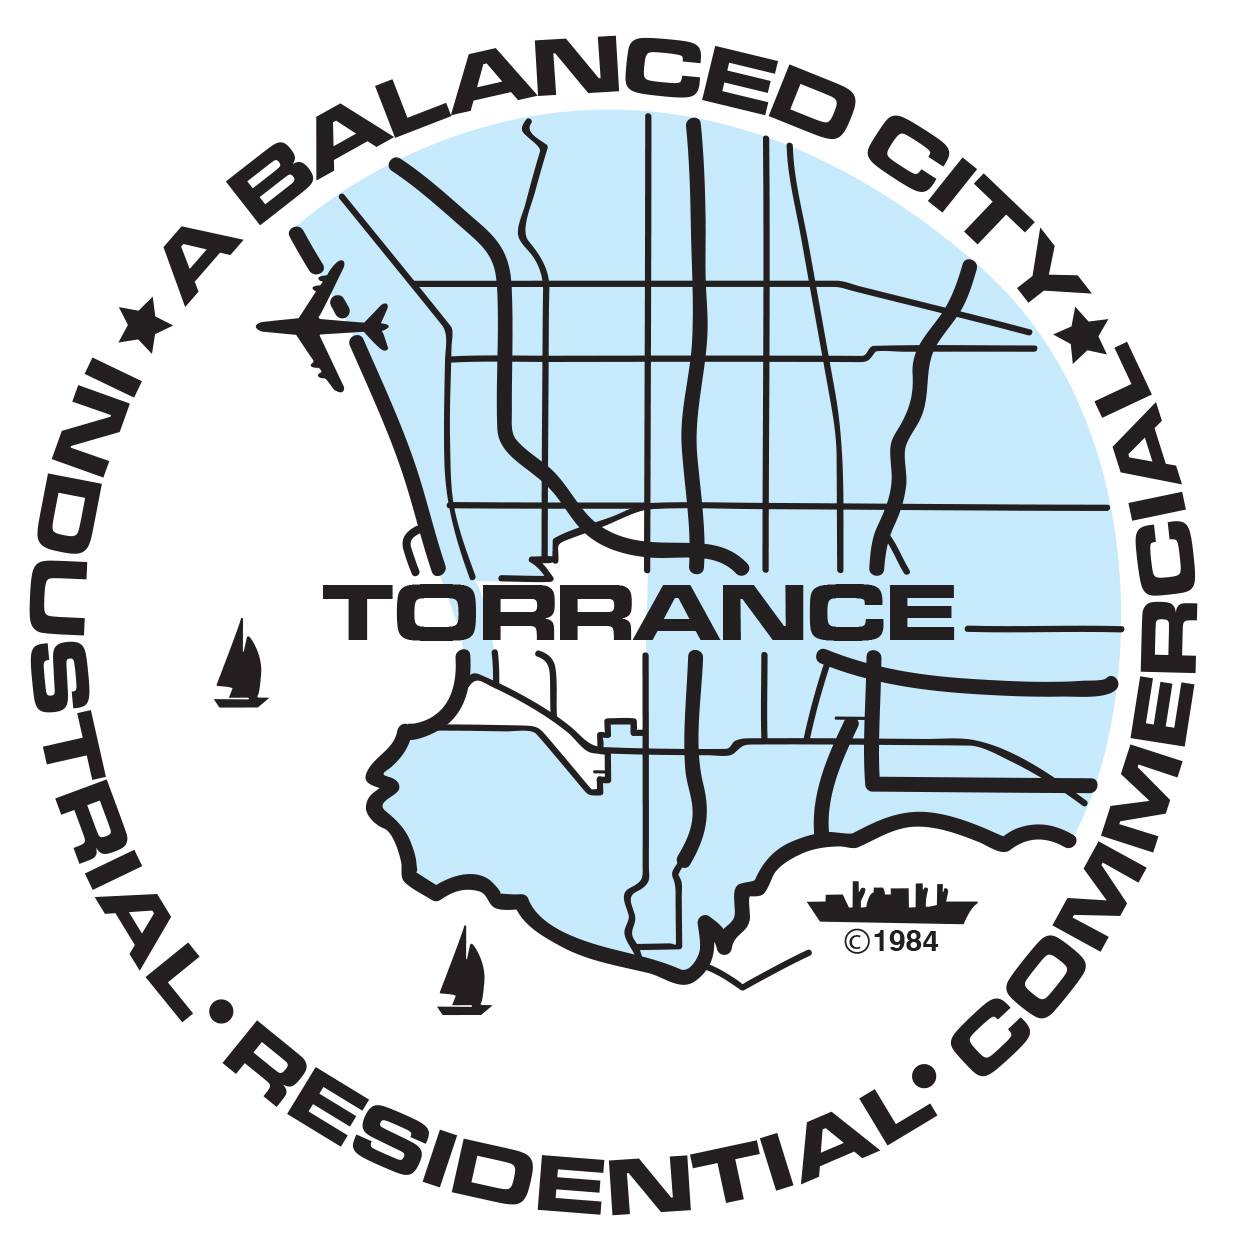 City of Torrance logo